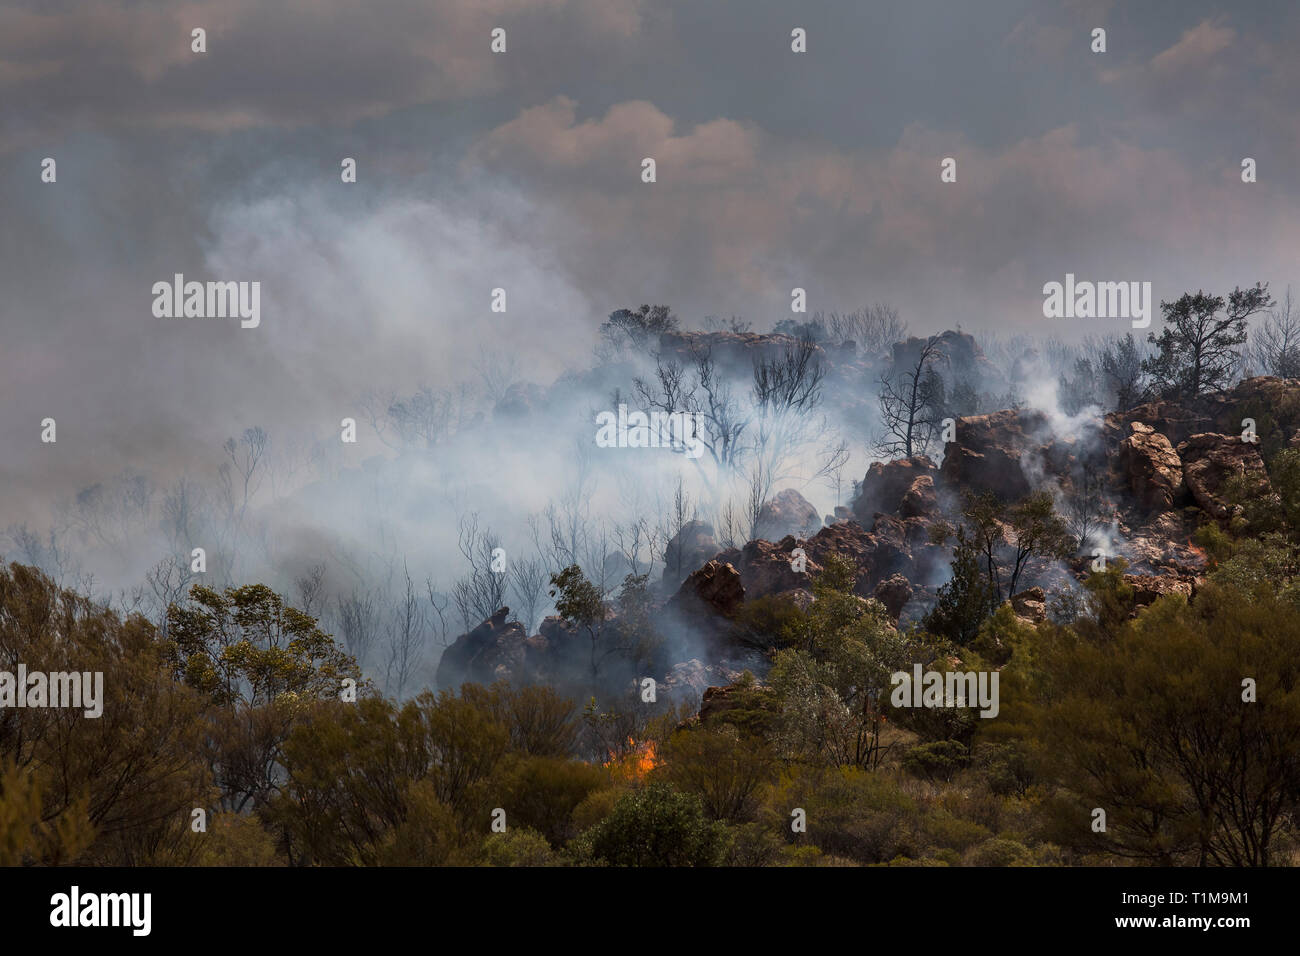 Wildfire brennen, Osten McDonnell Ranges, Alice Springs, Northern Territory, Australien Stockfoto